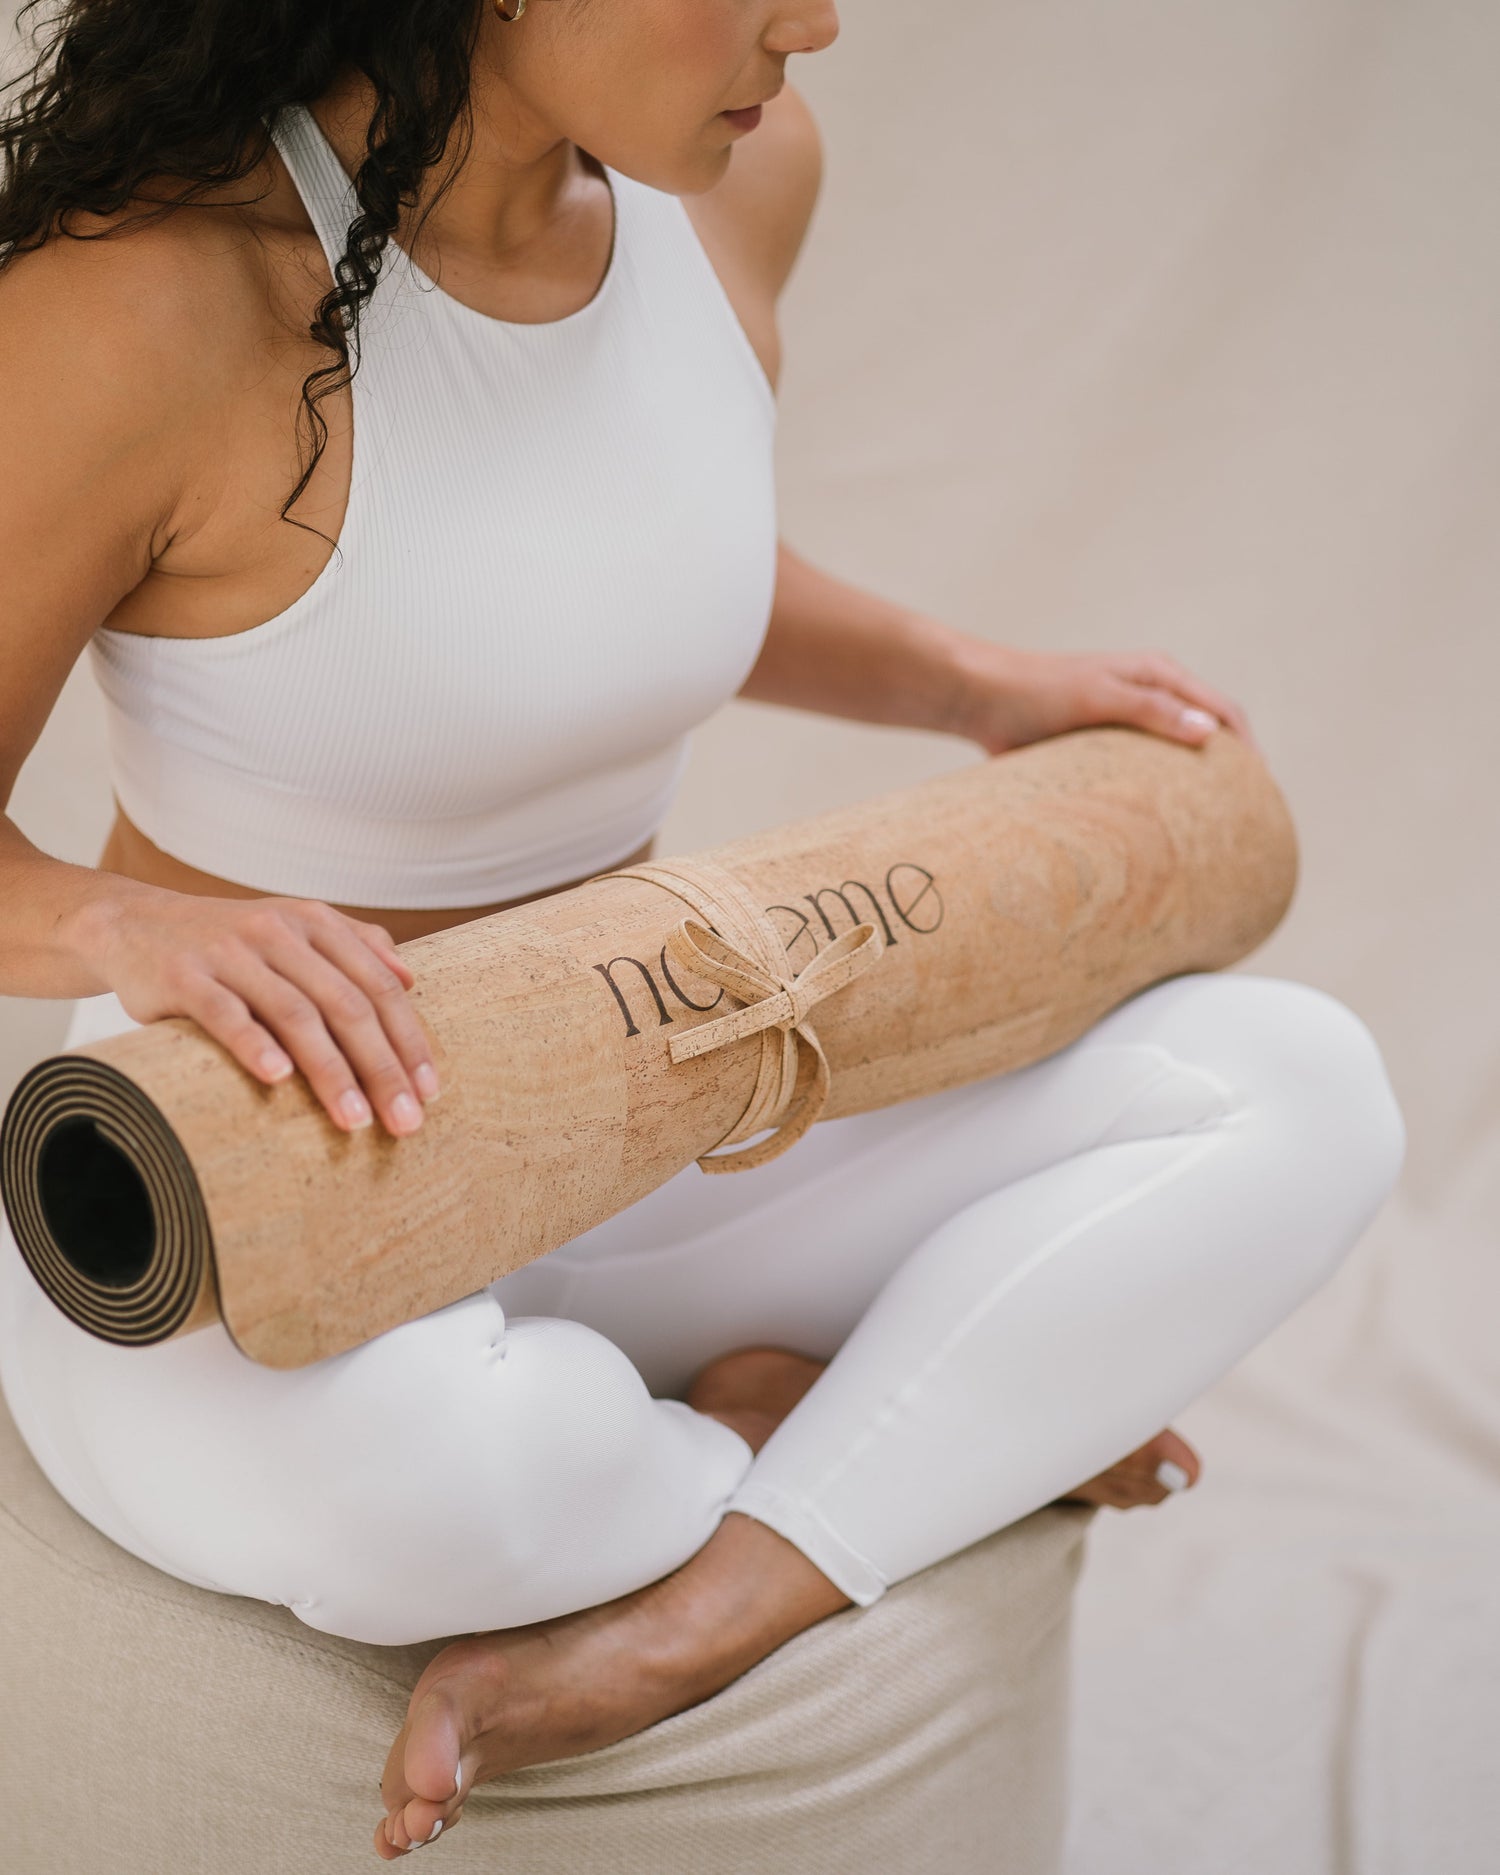 Yogi with a Noveme cork yoga mat on her lap